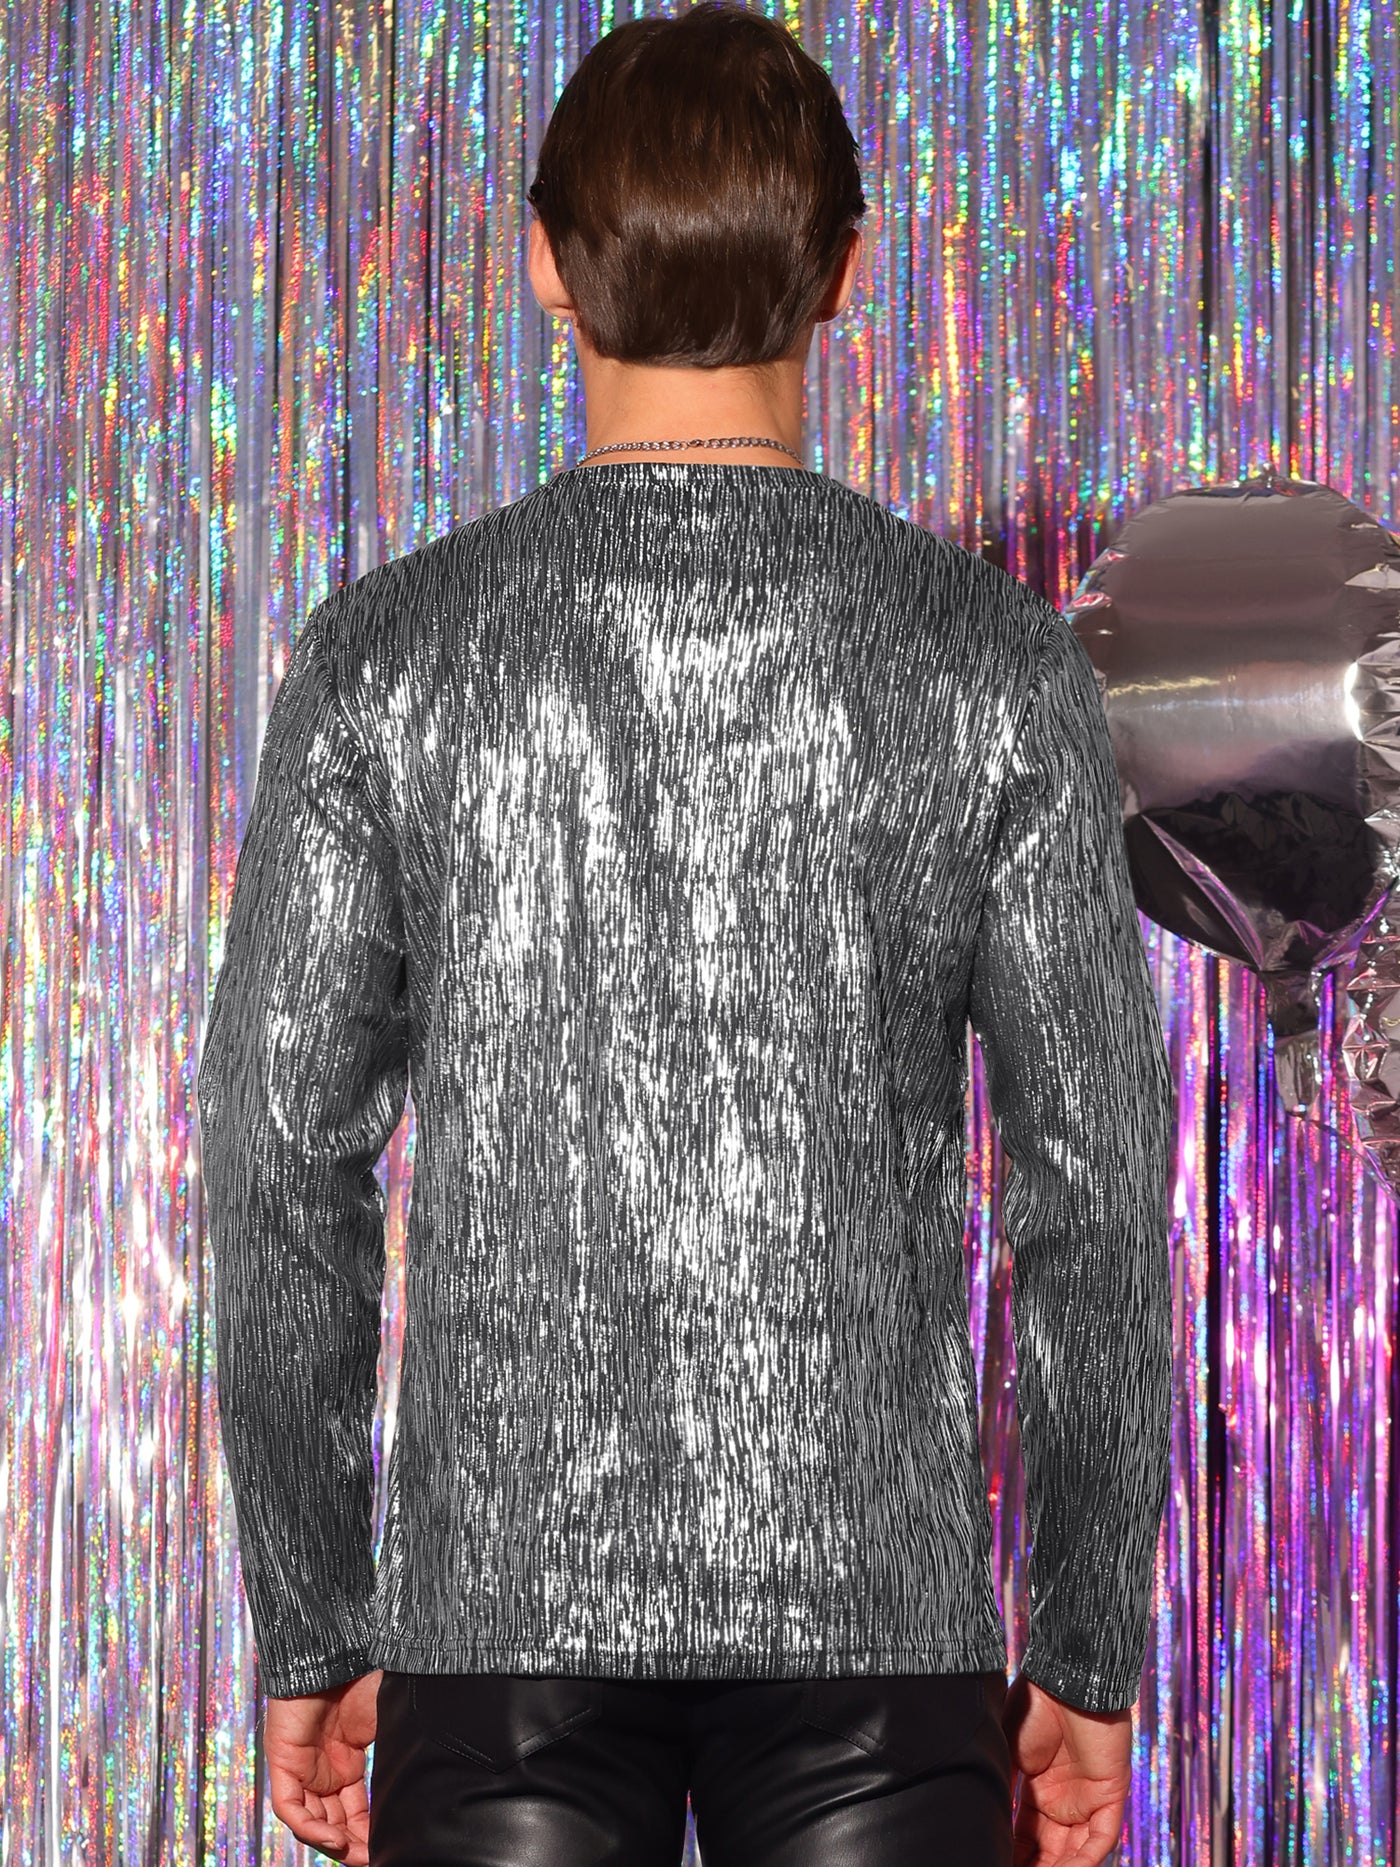 Bublédon Metallic Long Sleeves Top Party Clubwear Shiny T-Shirt Tee Shirt